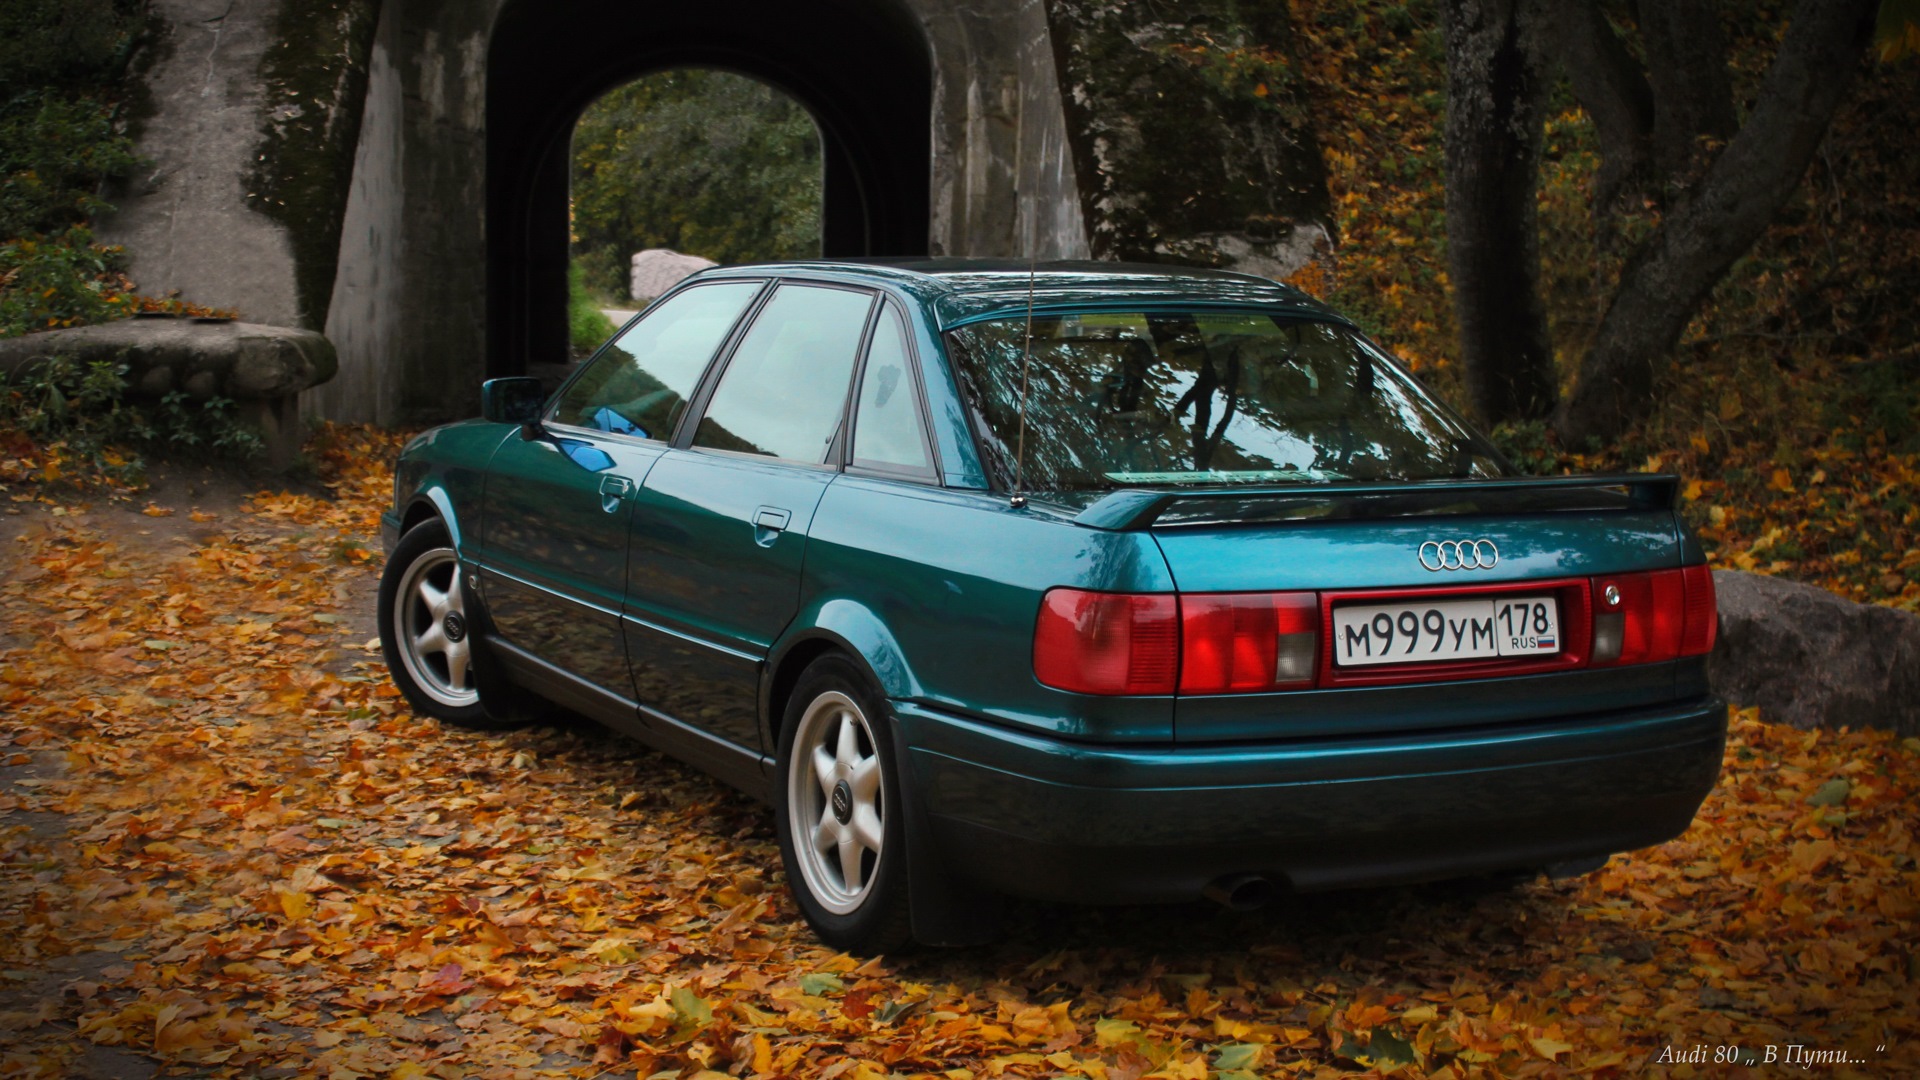 Audi 80 b4 s2. Ауди 80 б4. Ауди 80 б4 зеленая. Ауди 80 в 4 кузове. Ауди 80 б4 почему